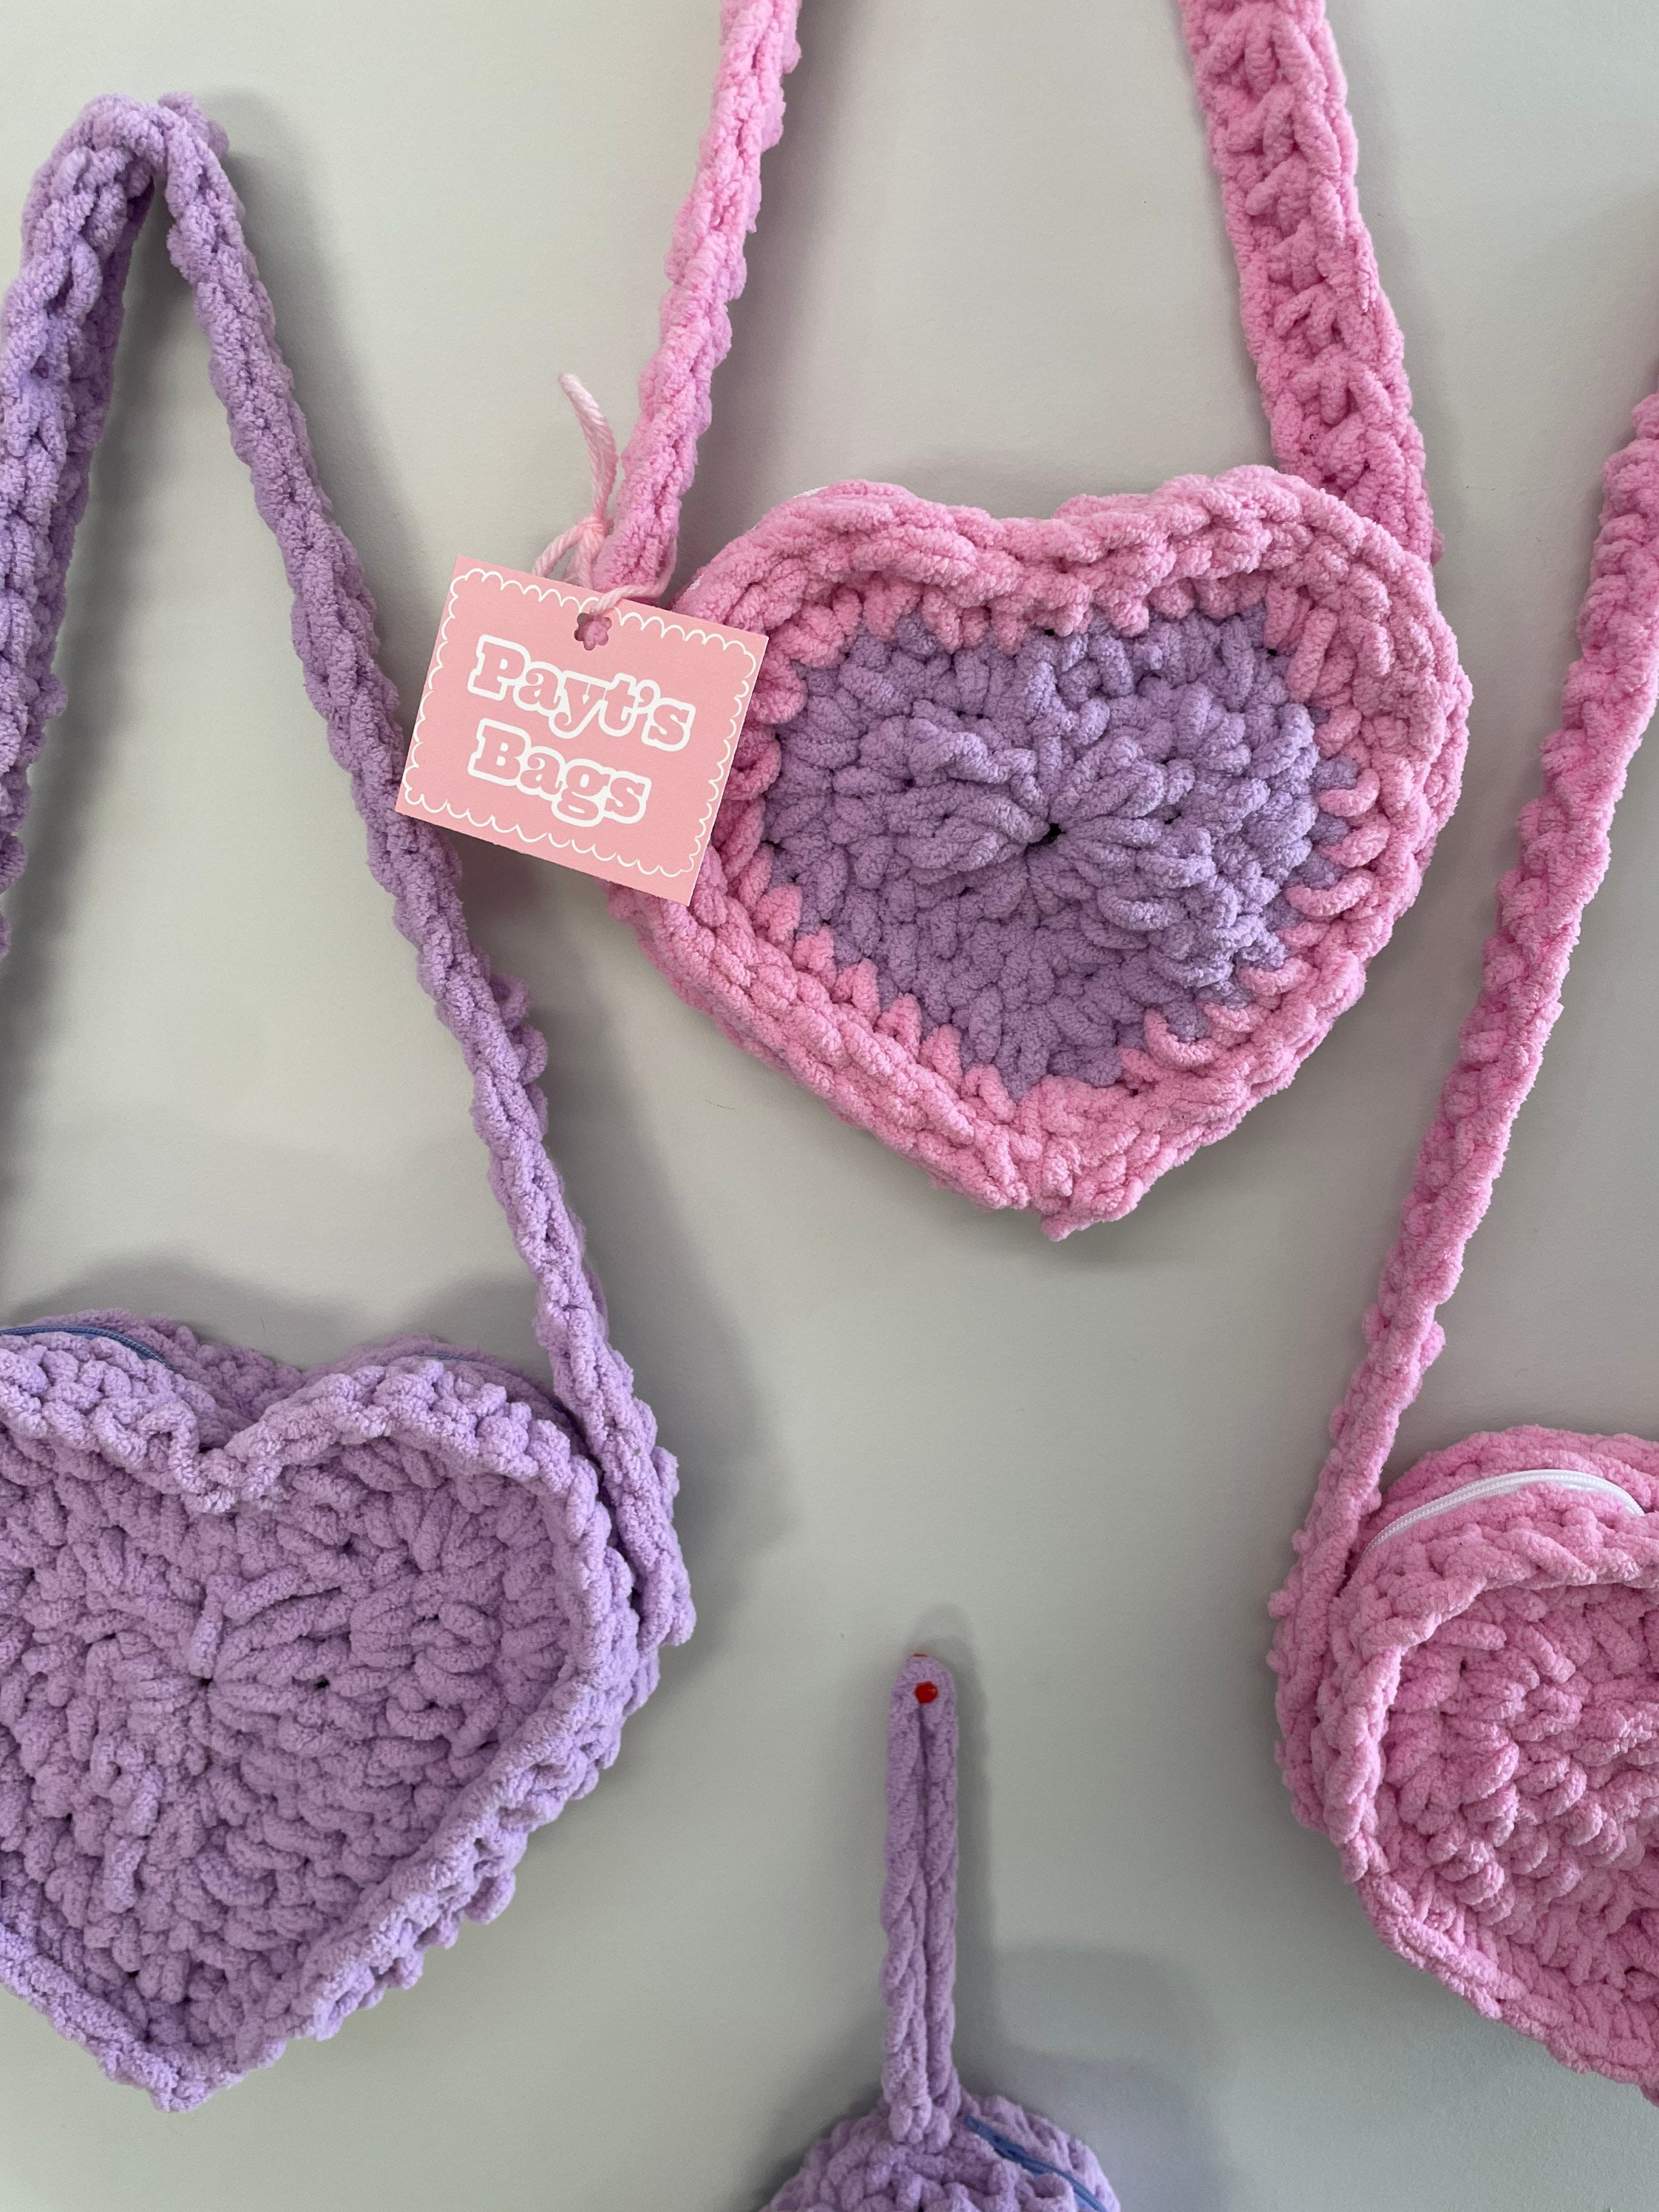 Is That The New Kawaii Medium Crochet Bag Cute Heart Pattern For